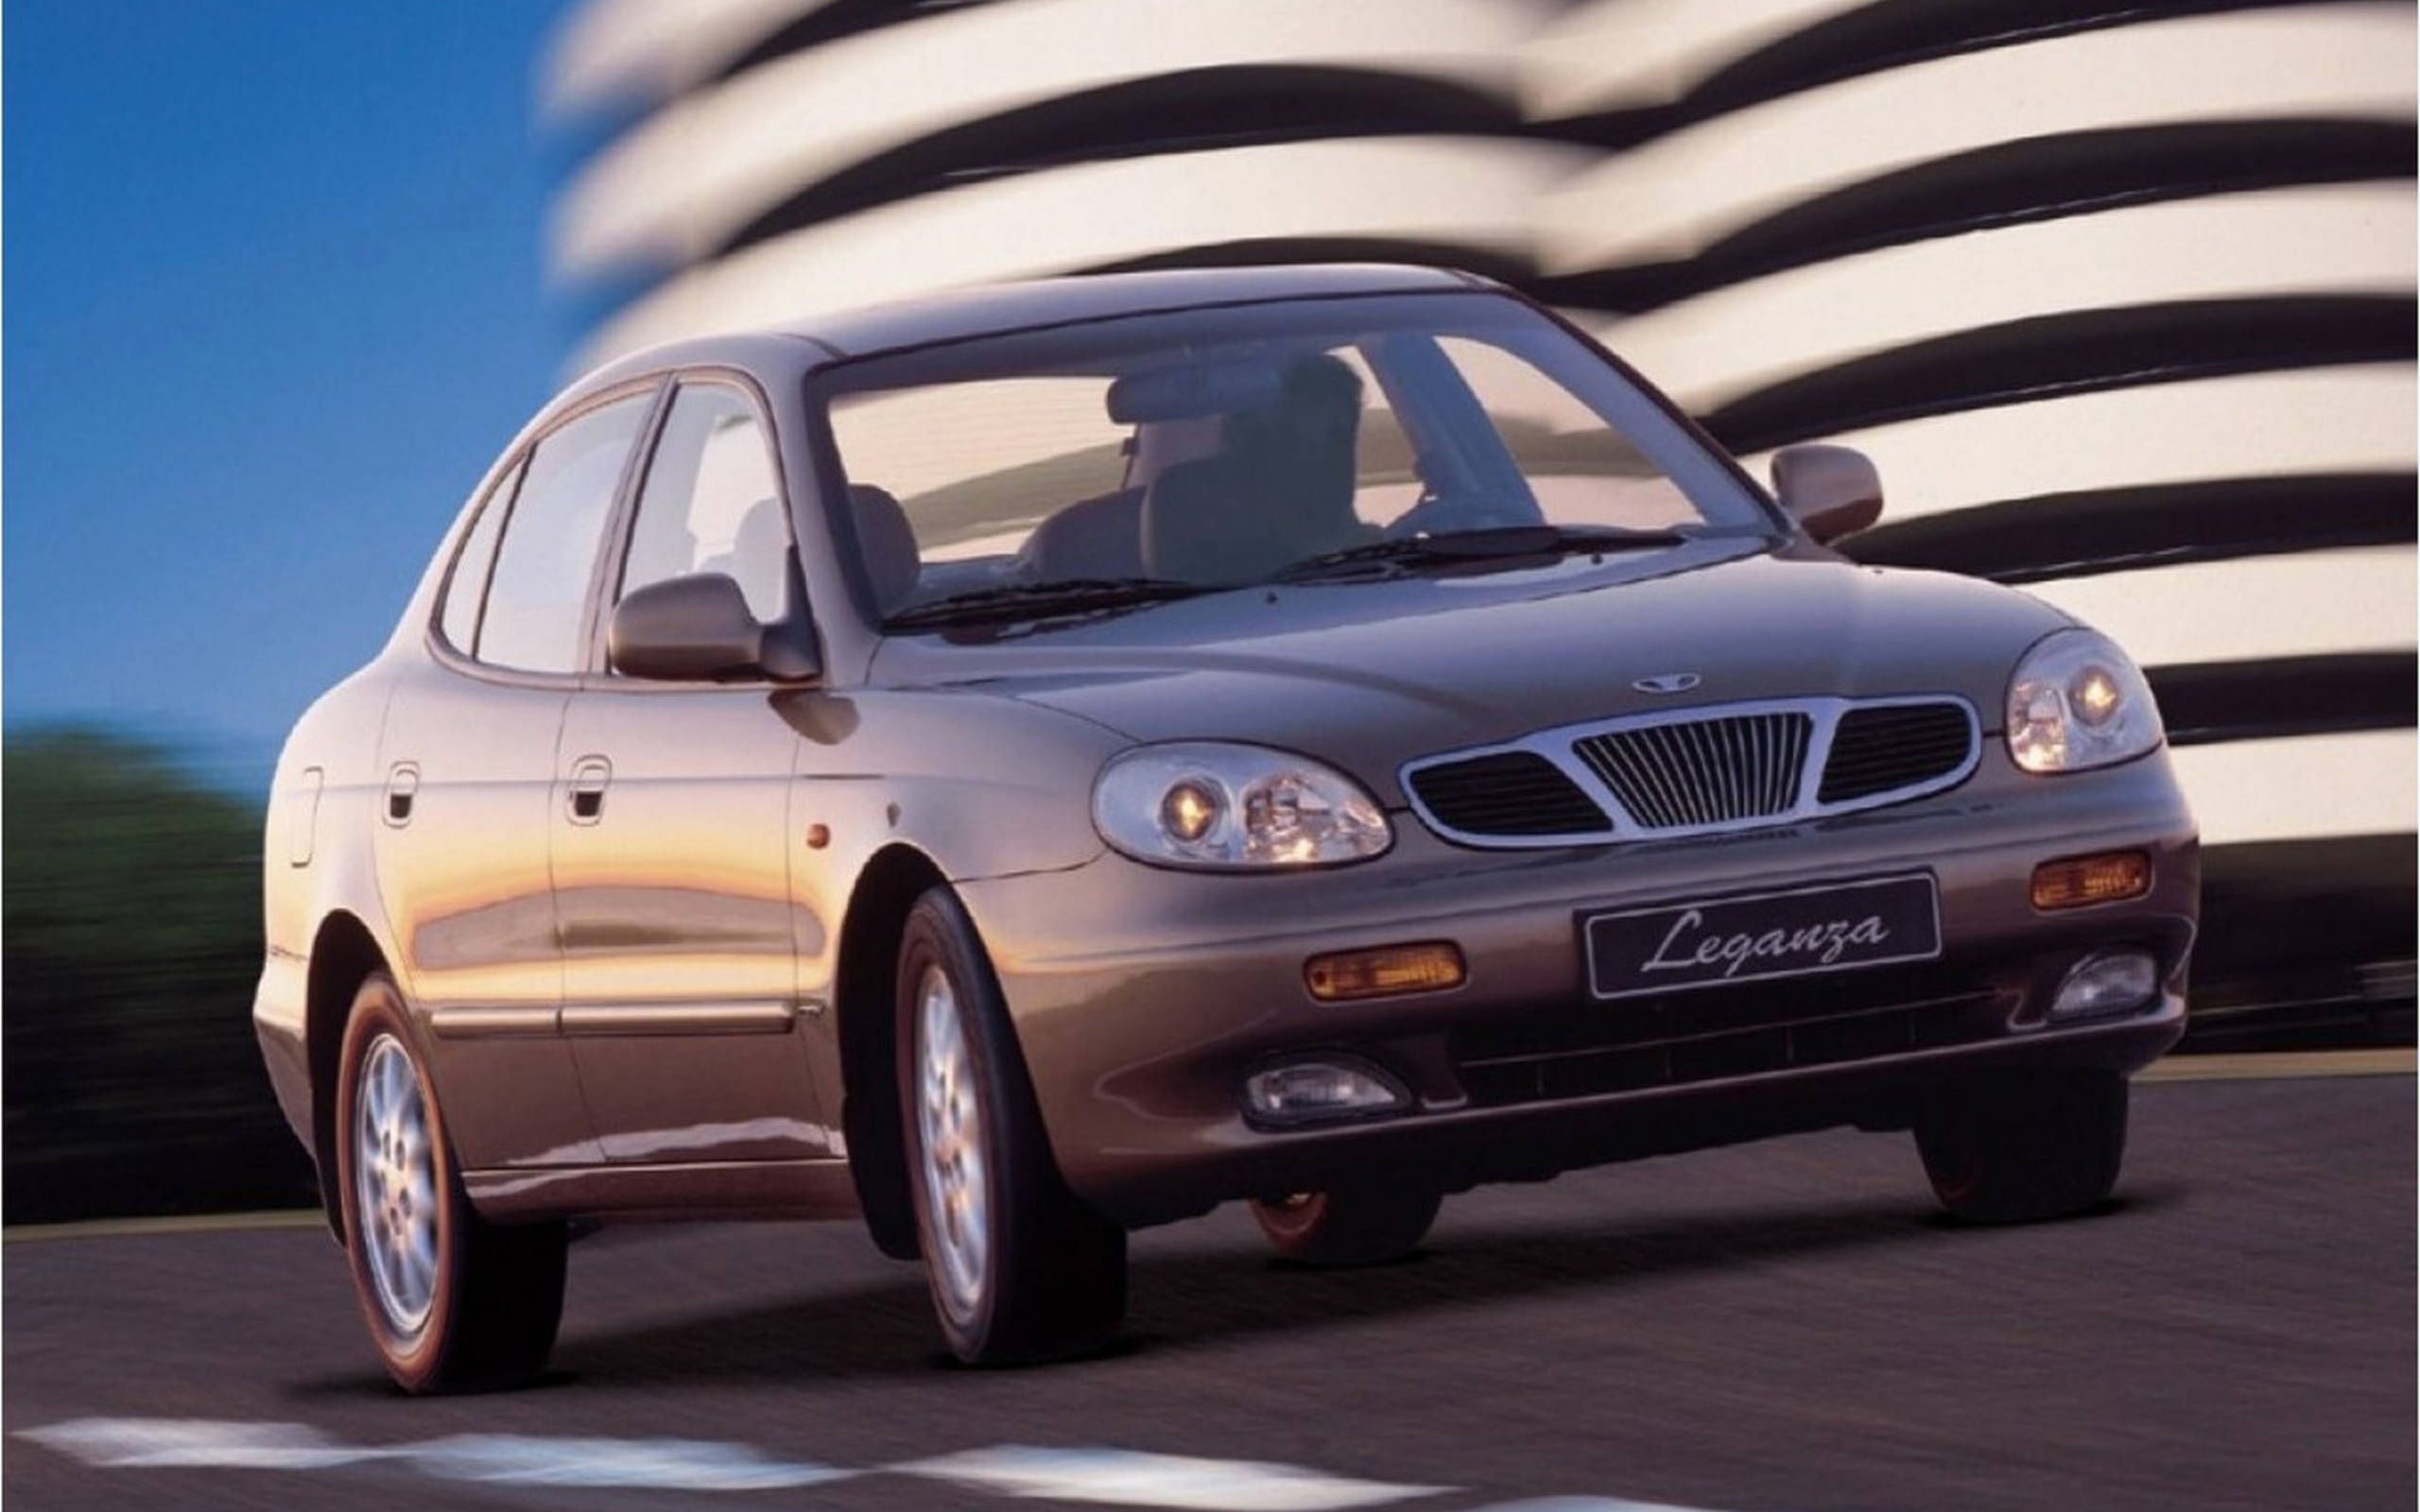 2000 Daewoo Leganza drive review